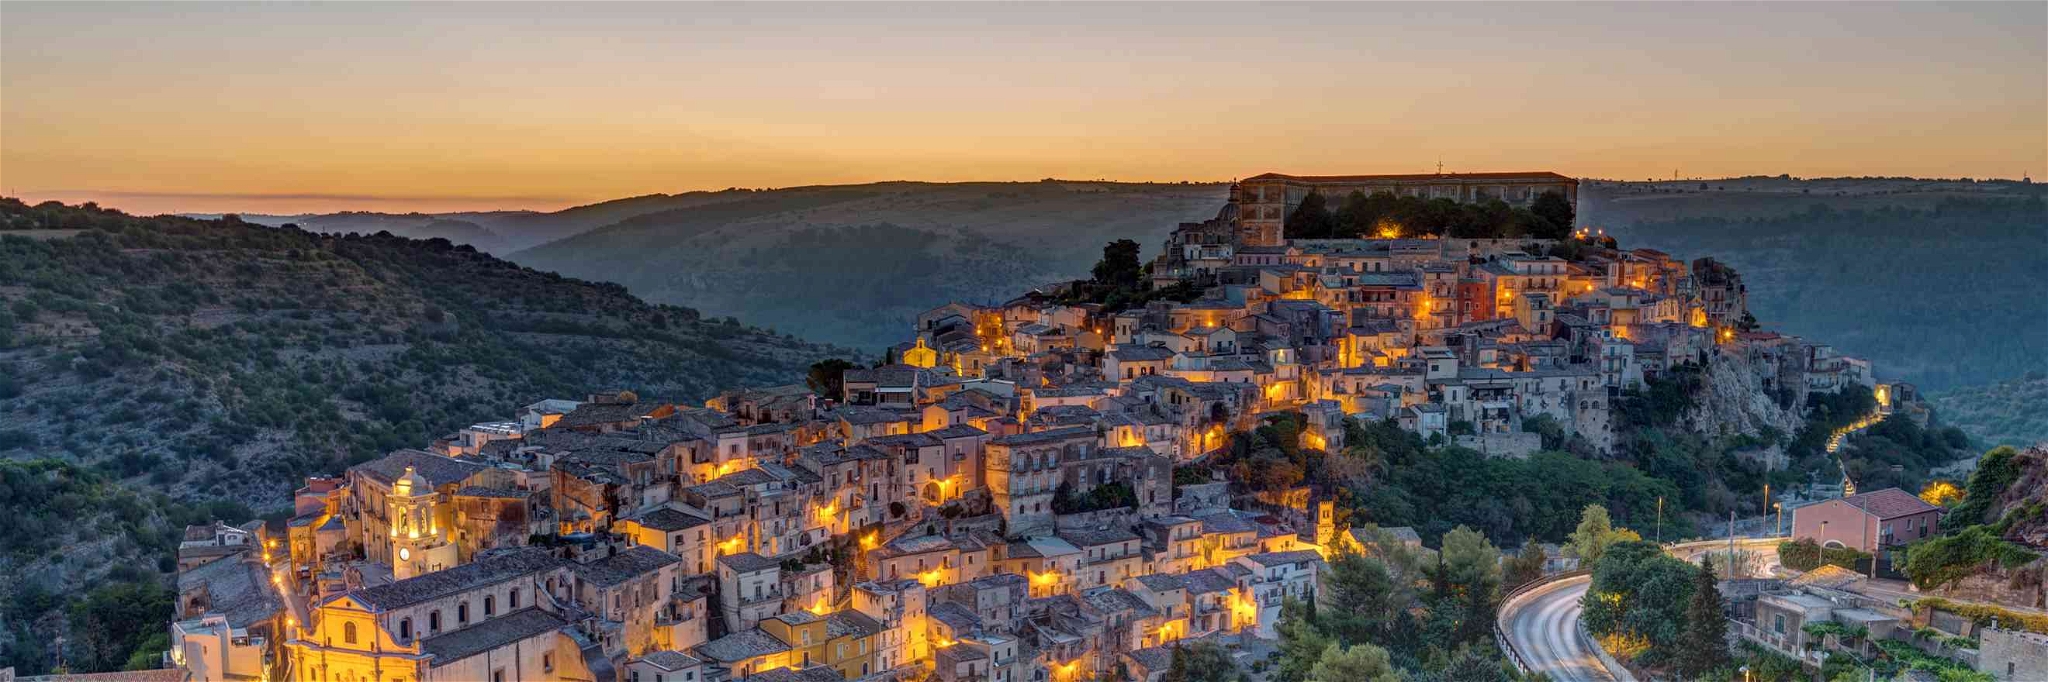 Ragusa in Sicily at sunrise